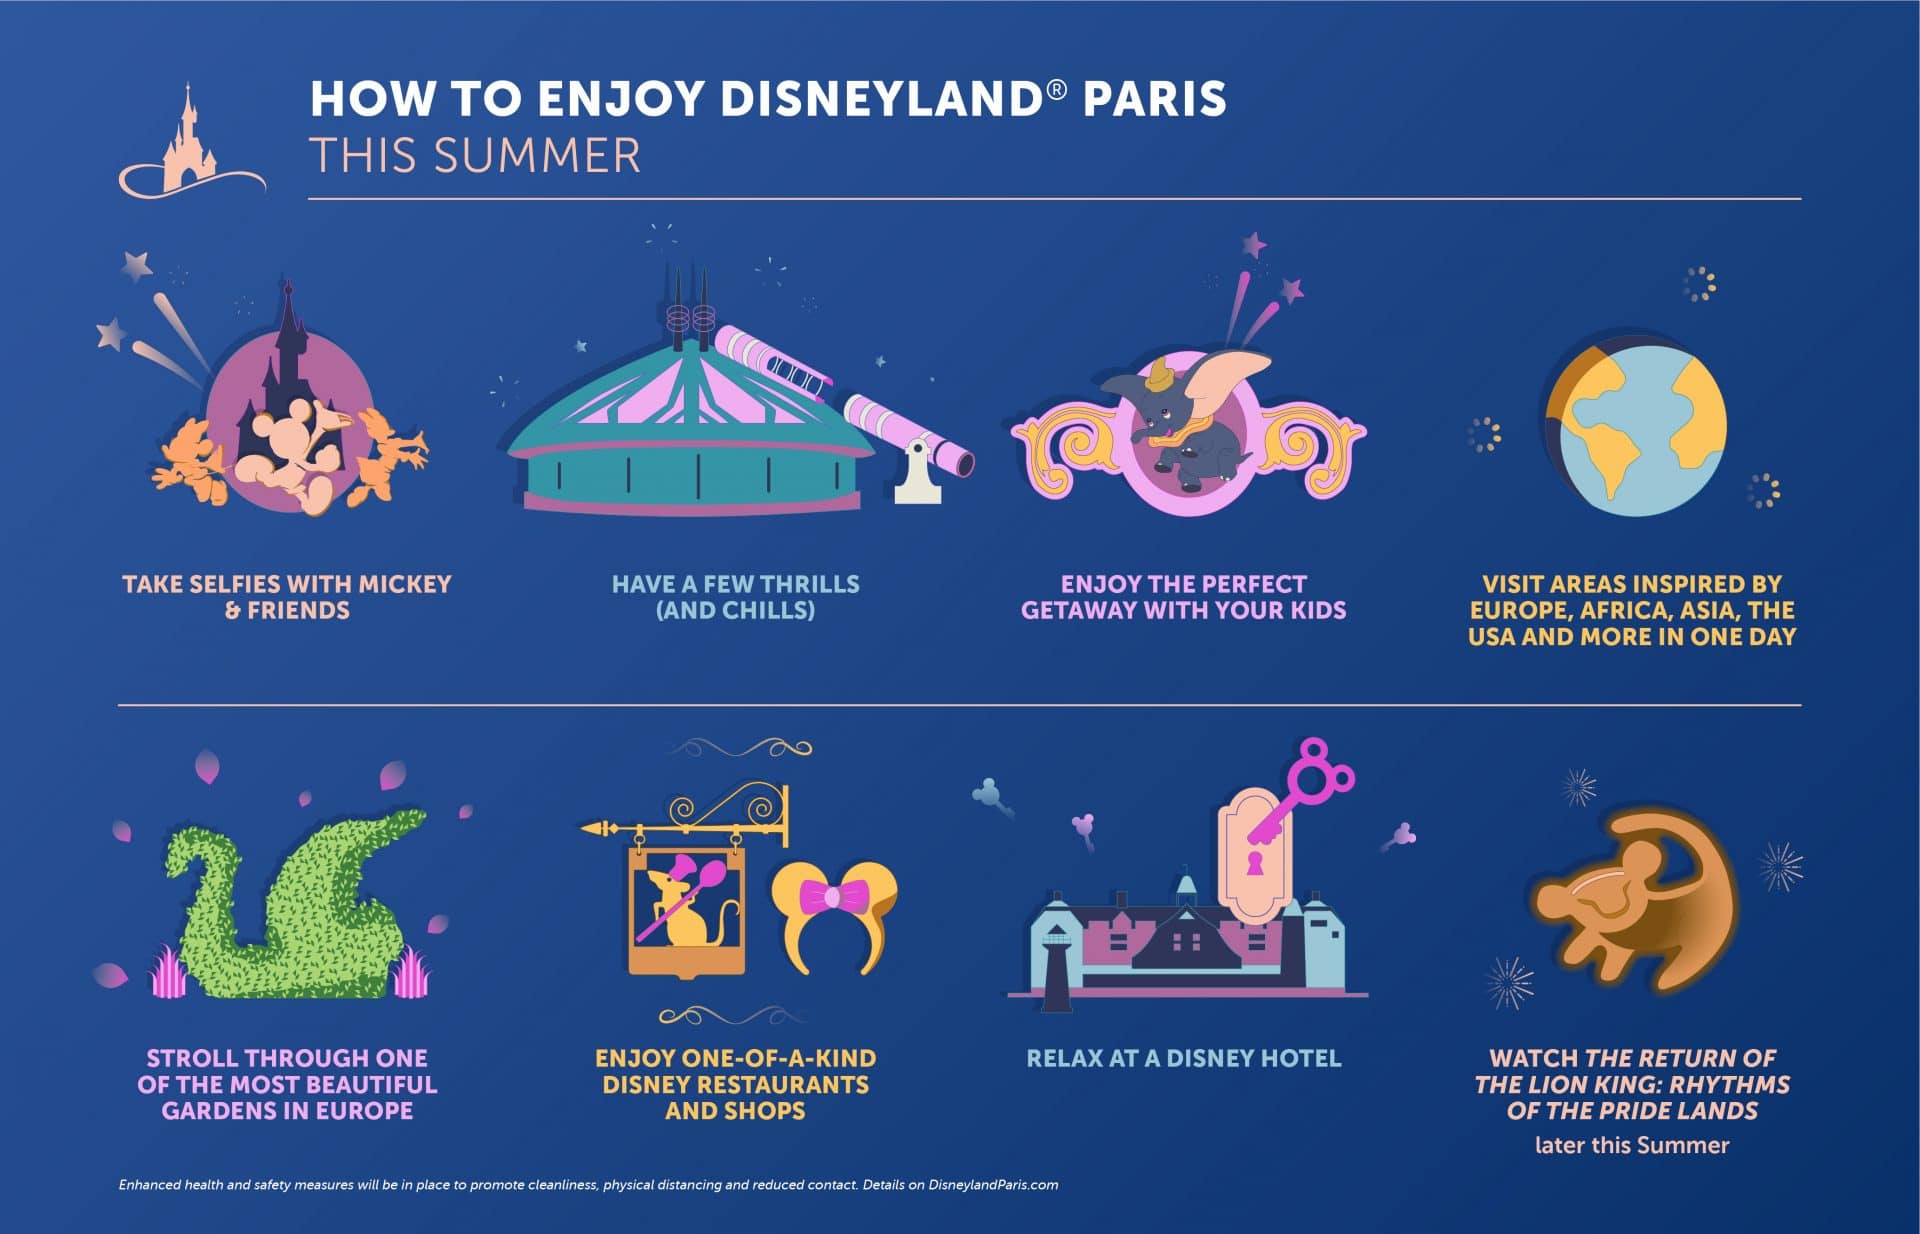 Disneyland Paris Infographic - How to Enjoy Disneyland Paris This Summer